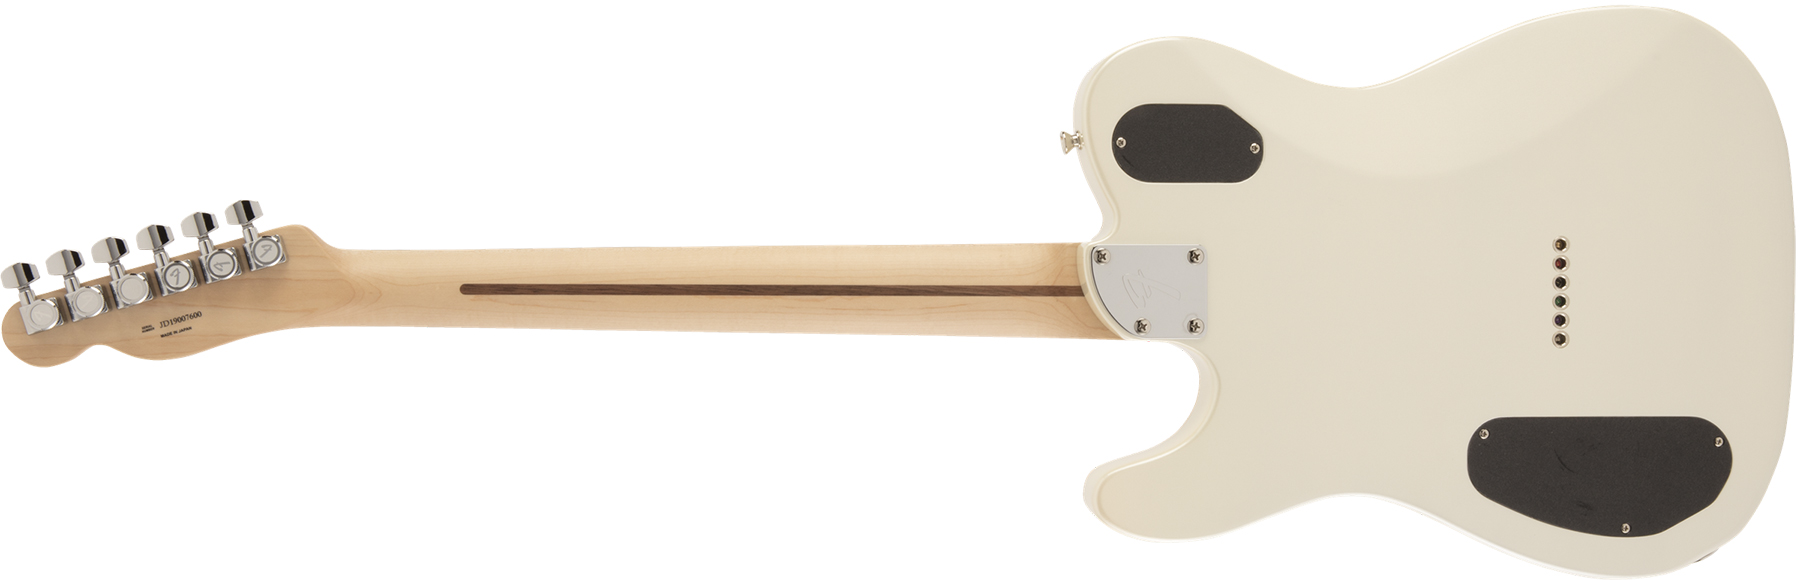 Fender Tele Modern Hh Jap 2h Ht Rw - Olympic Pearl - Tel shape electric guitar - Variation 1